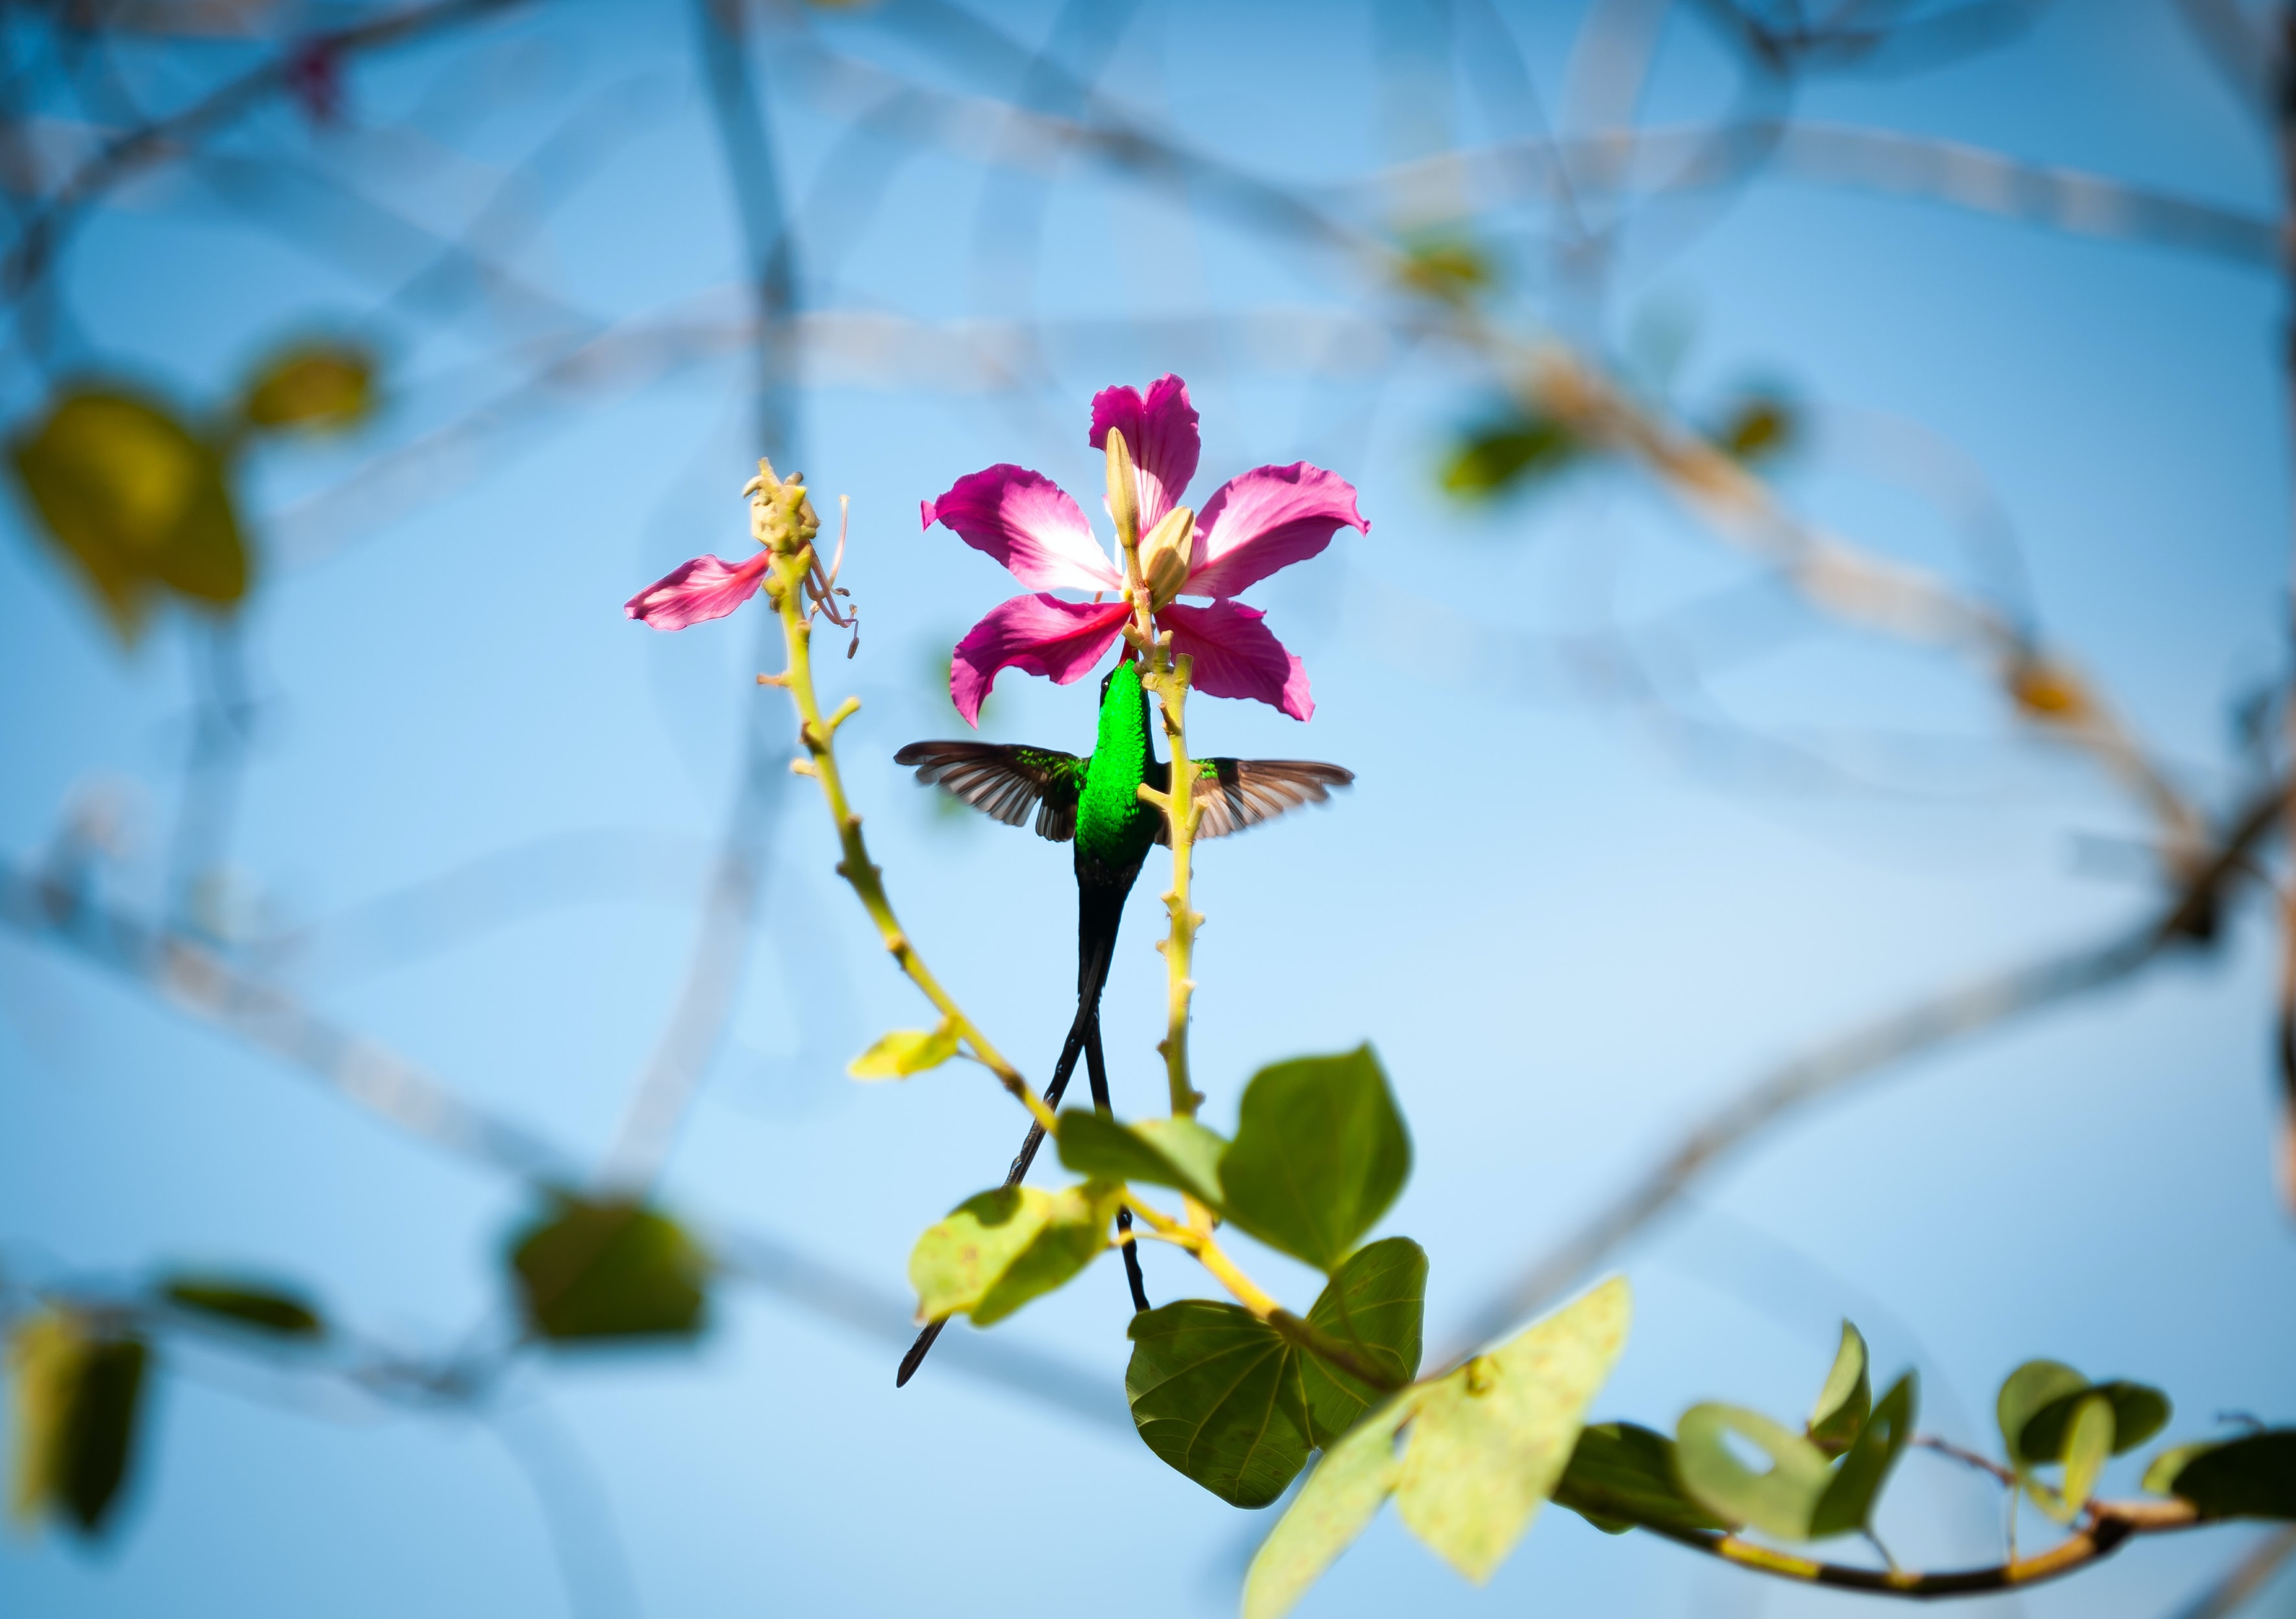 Hummingbird flying around an exotic flower in Jamaica